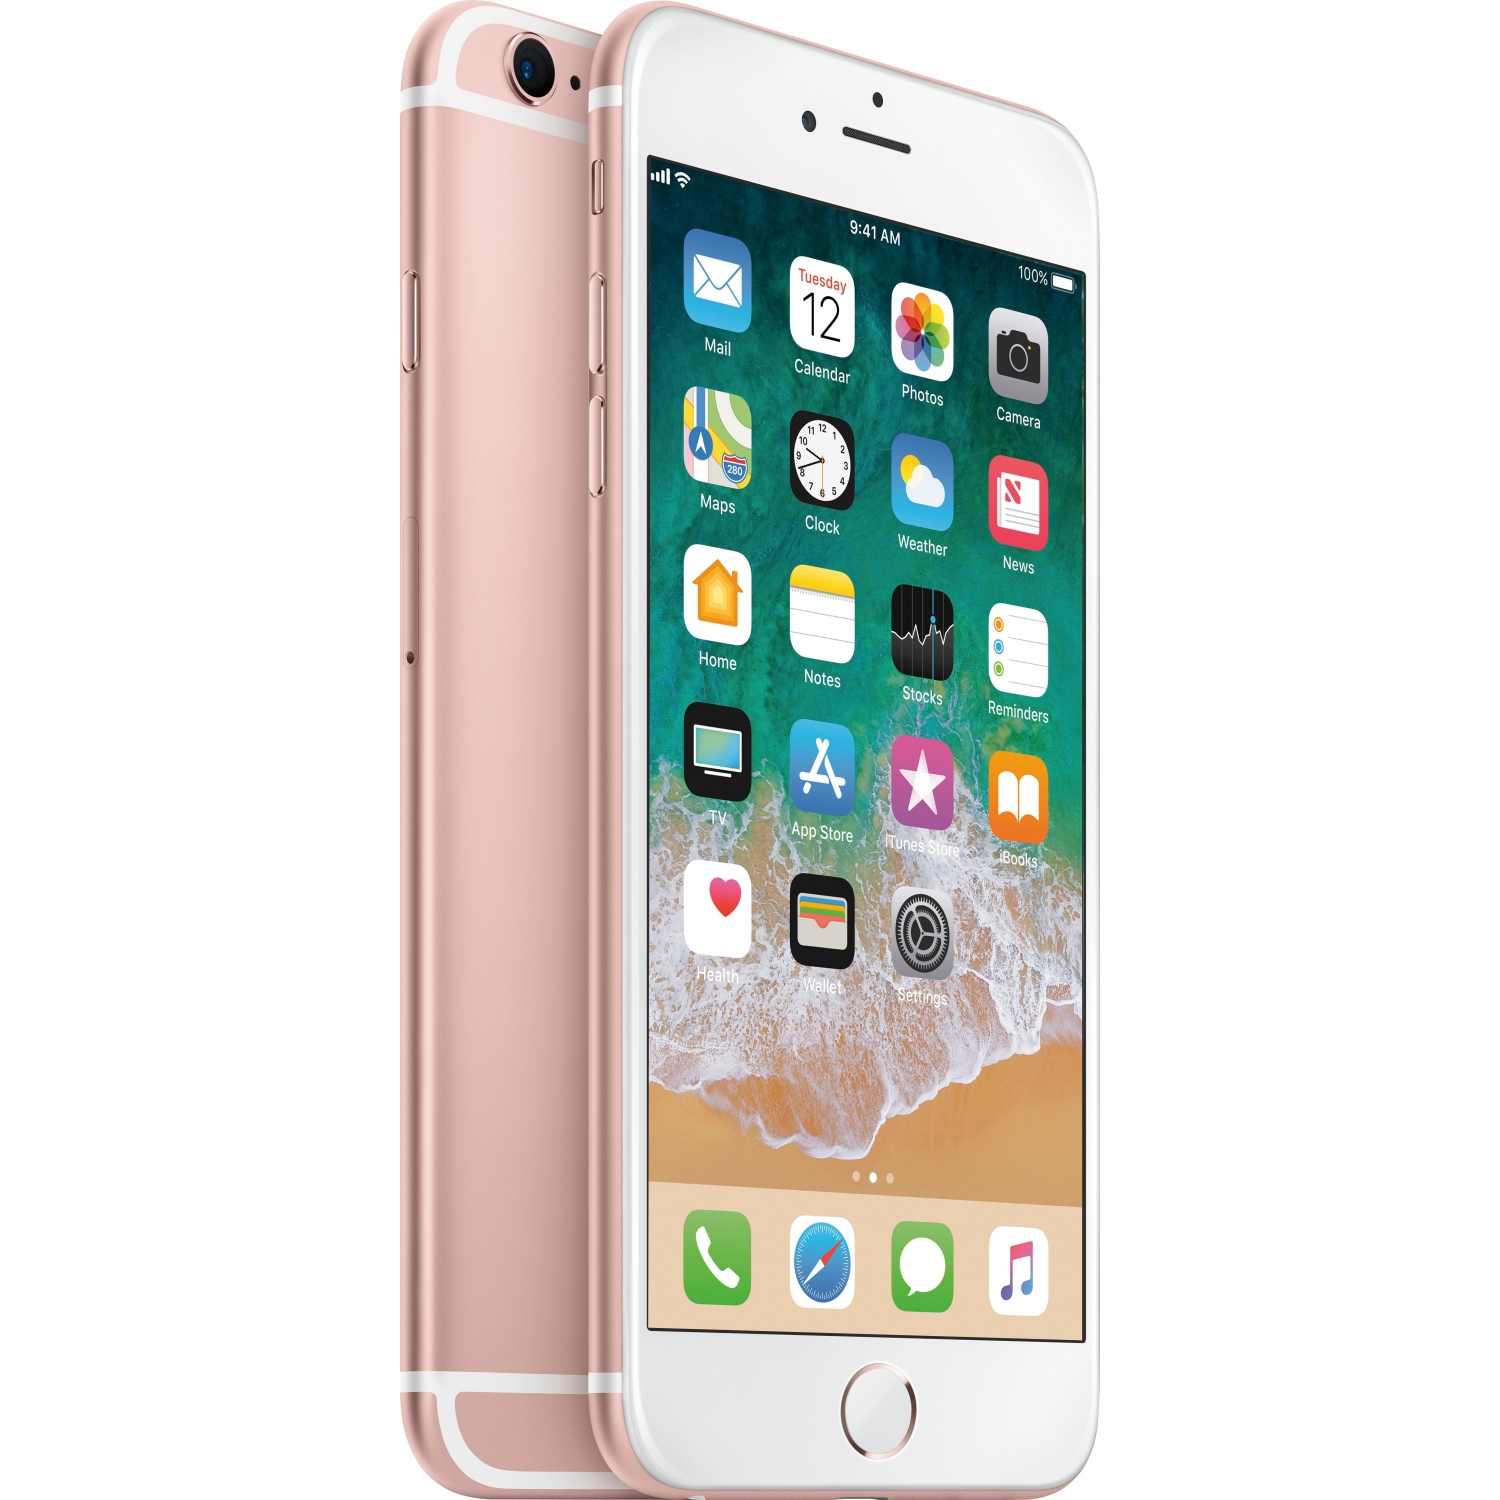 Refurbished (Good) - Apple iPhone 6s Plus 64GB Smartphone - Rose Gold - Unlocked